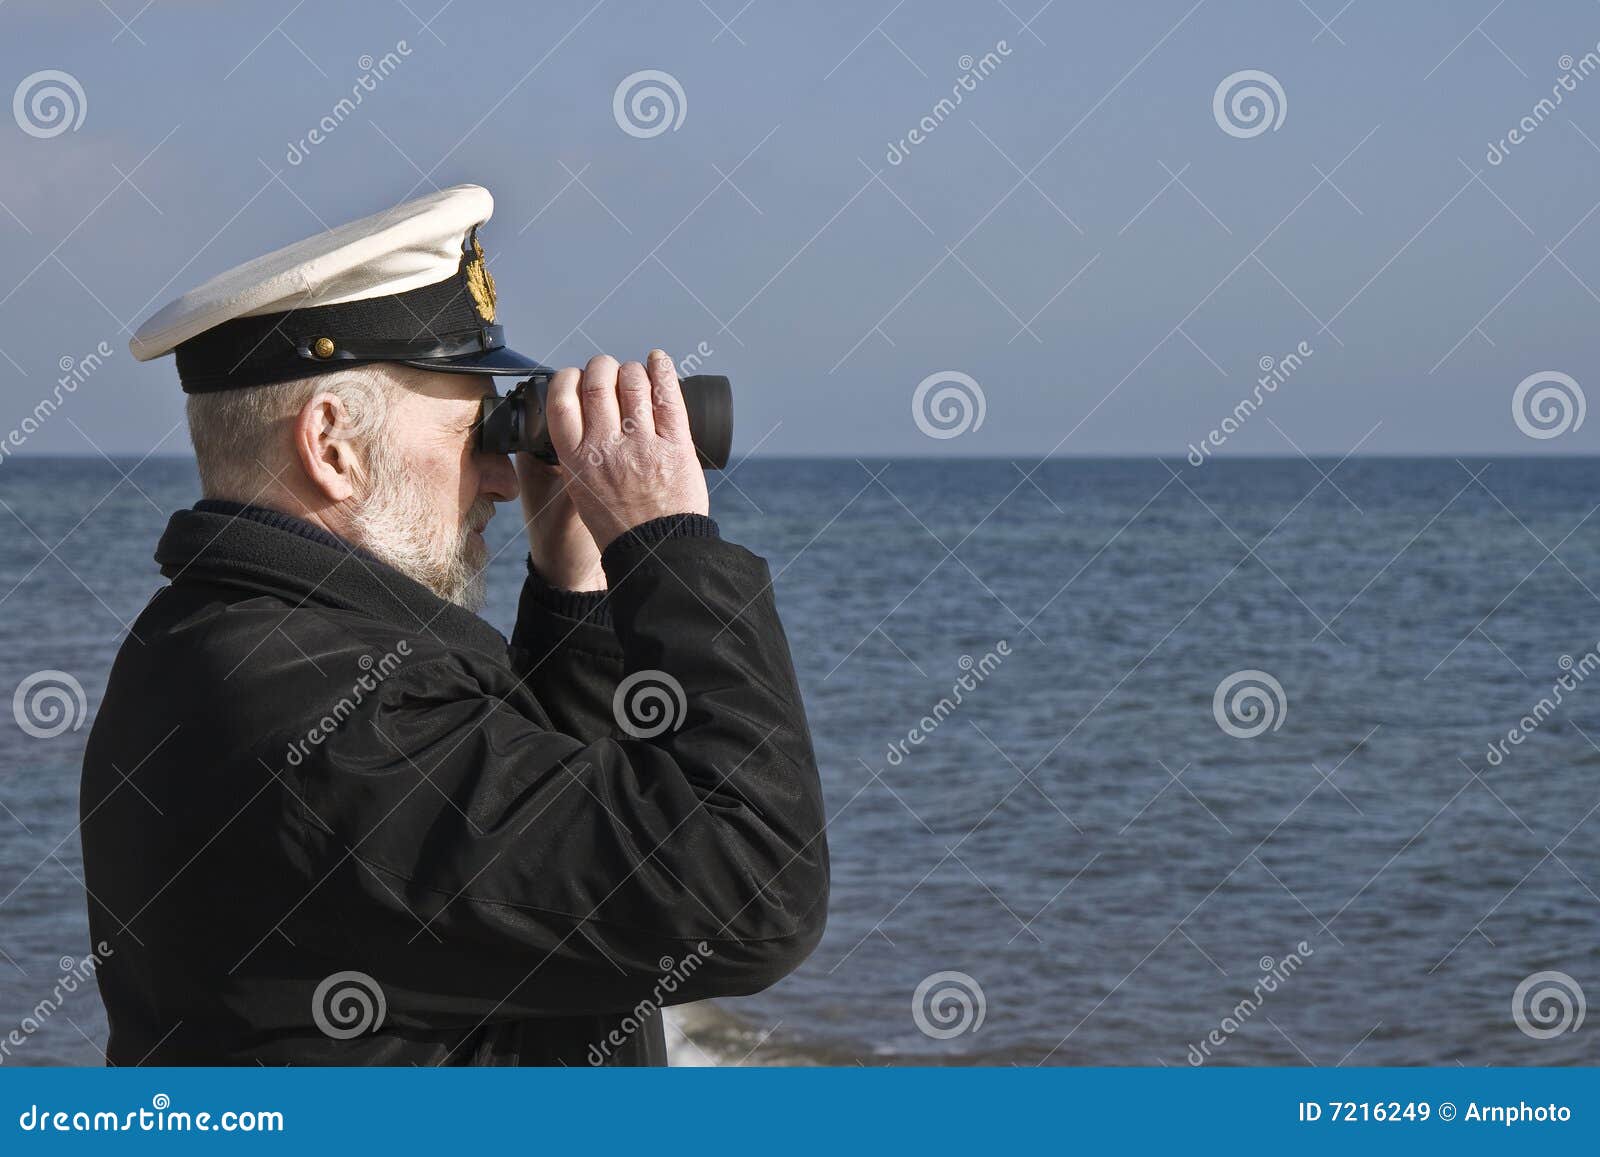 sailor with binoculars